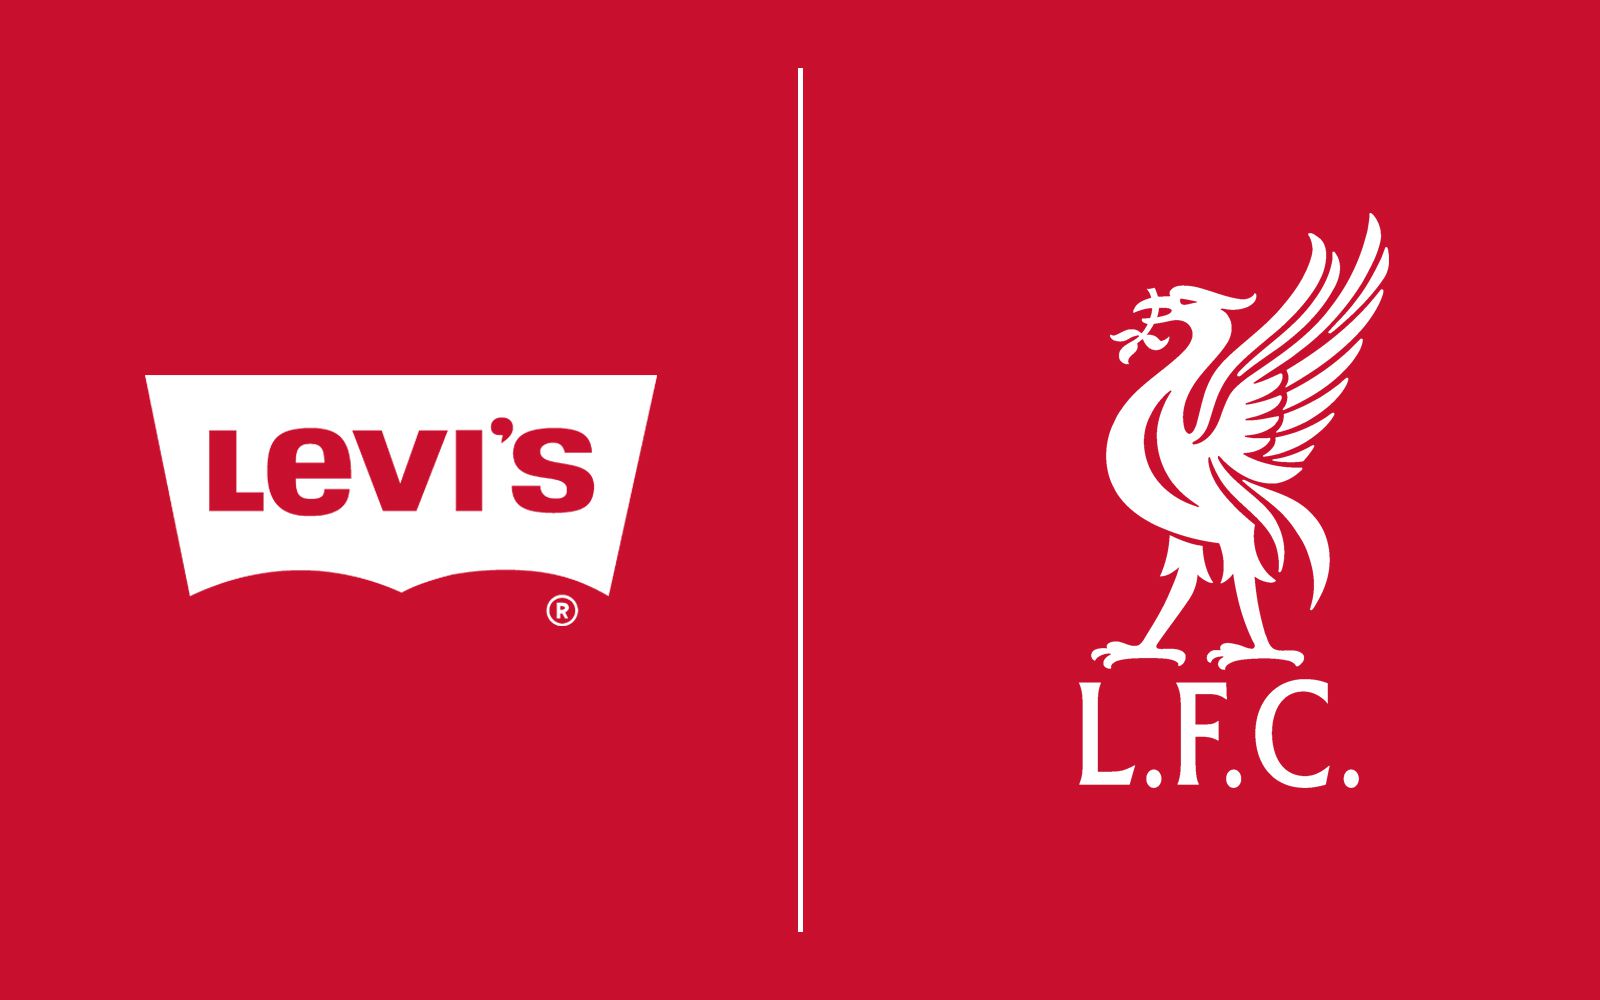 Liverpool FC announces a partnership with Levi's